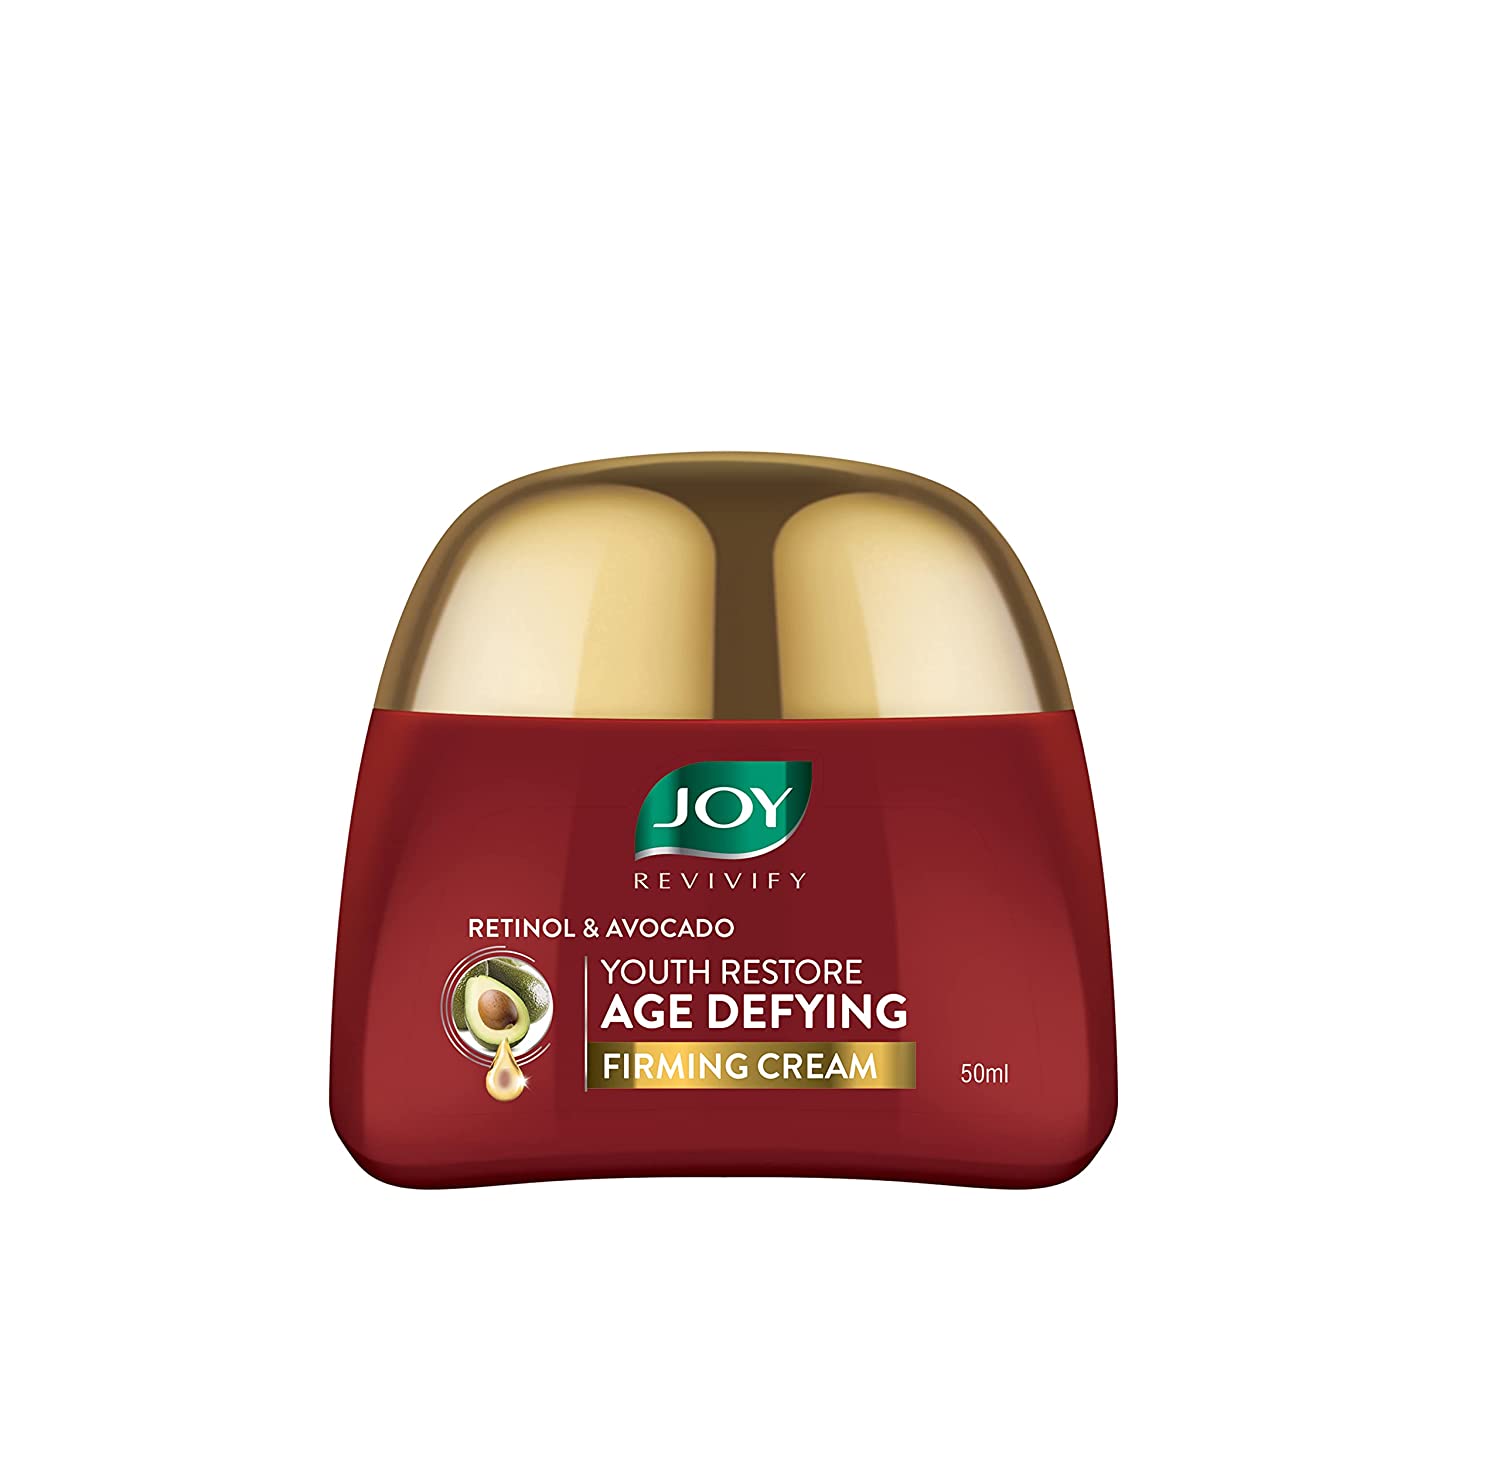 Joy Revivify Retinol & Avocado Youth Restore Age Defying Firming Cream - 50ml, Joy Revivify Retinol & Avocado Youth Restore Age Defying Firming Cream, anti ageing cream